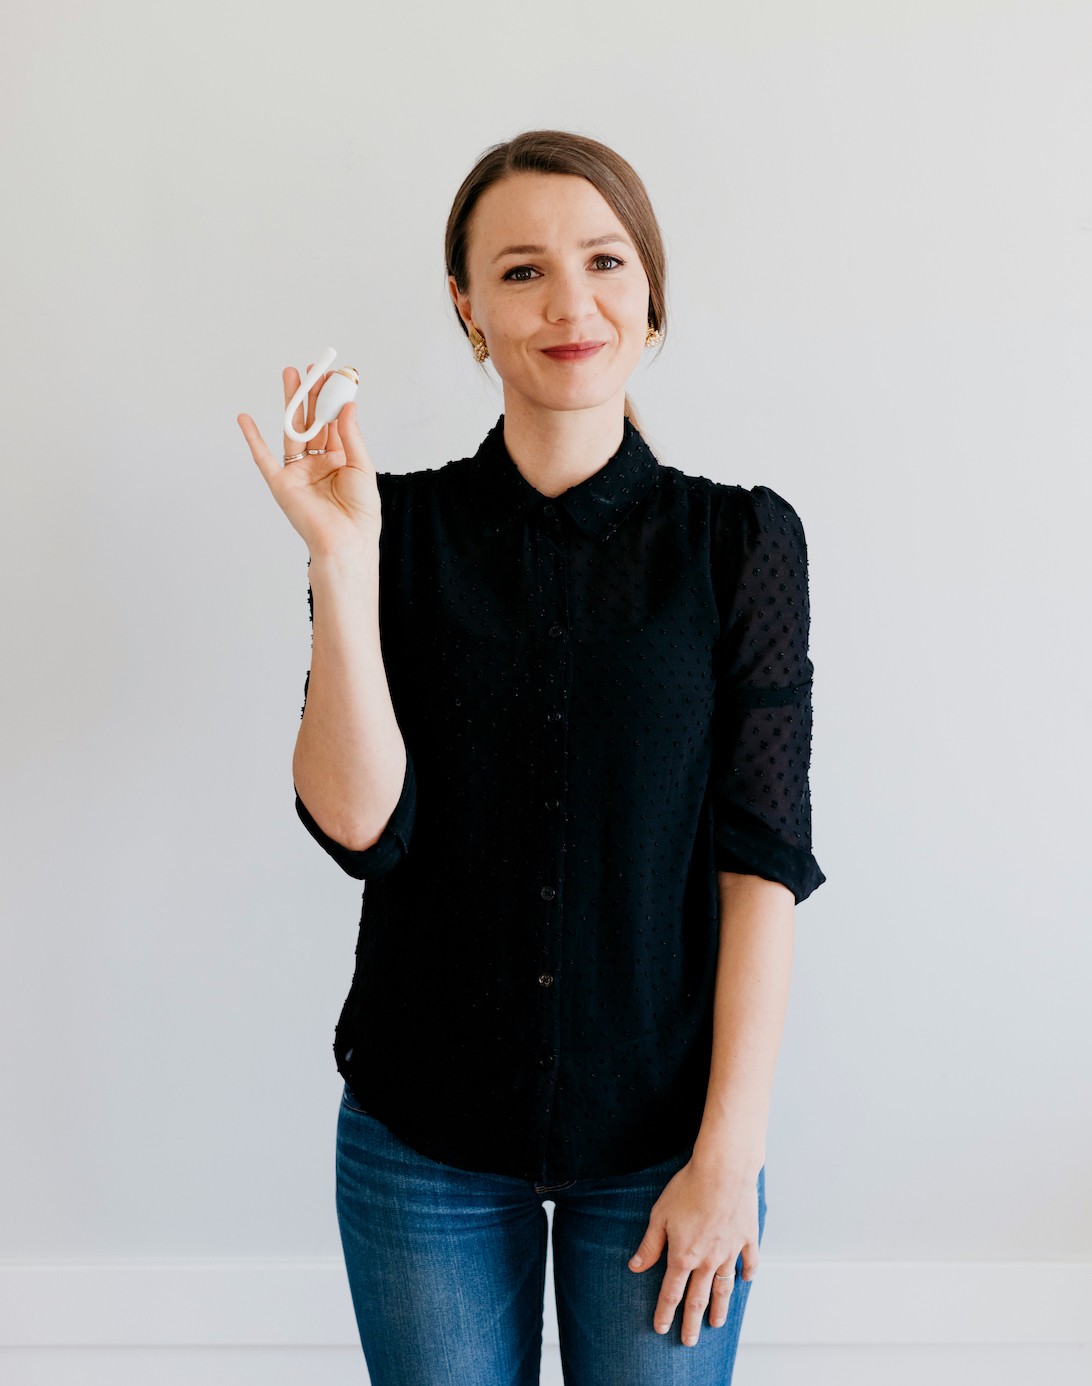 Kristina Cahojova kegg founder CEO